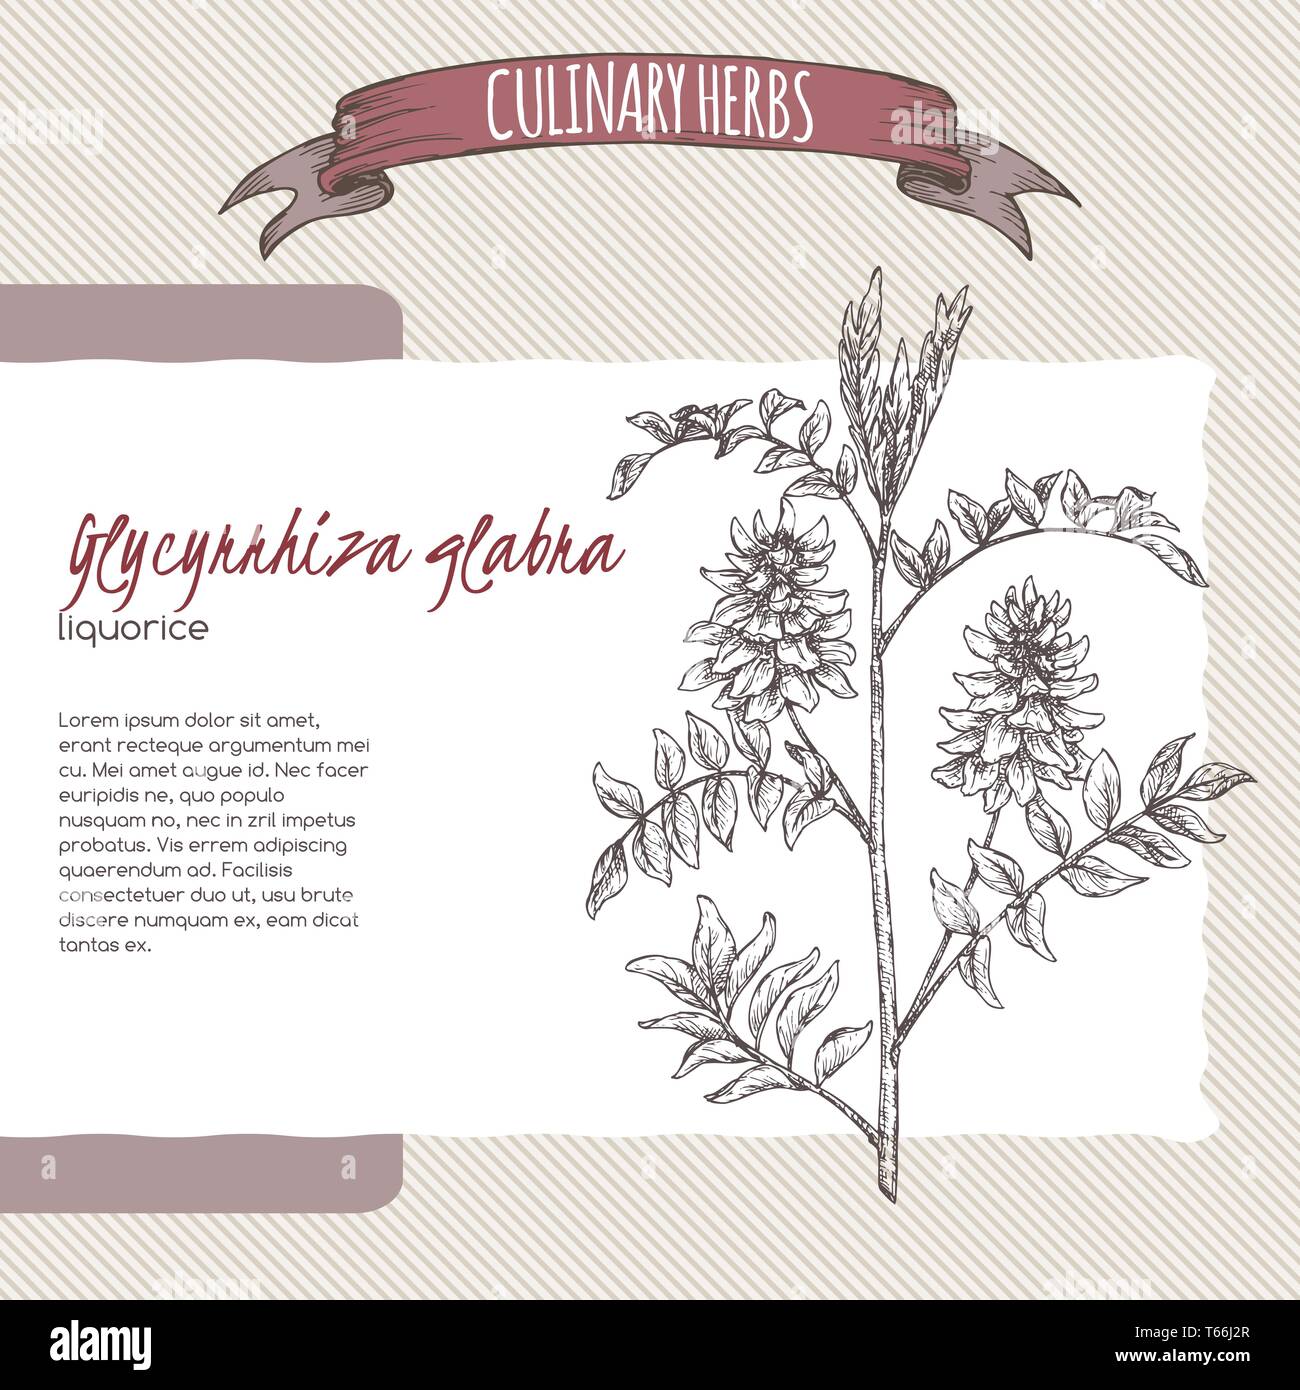 Glycyrrhiza glabra aka liquorice sketch. Culinary herbs series. Stock Vector